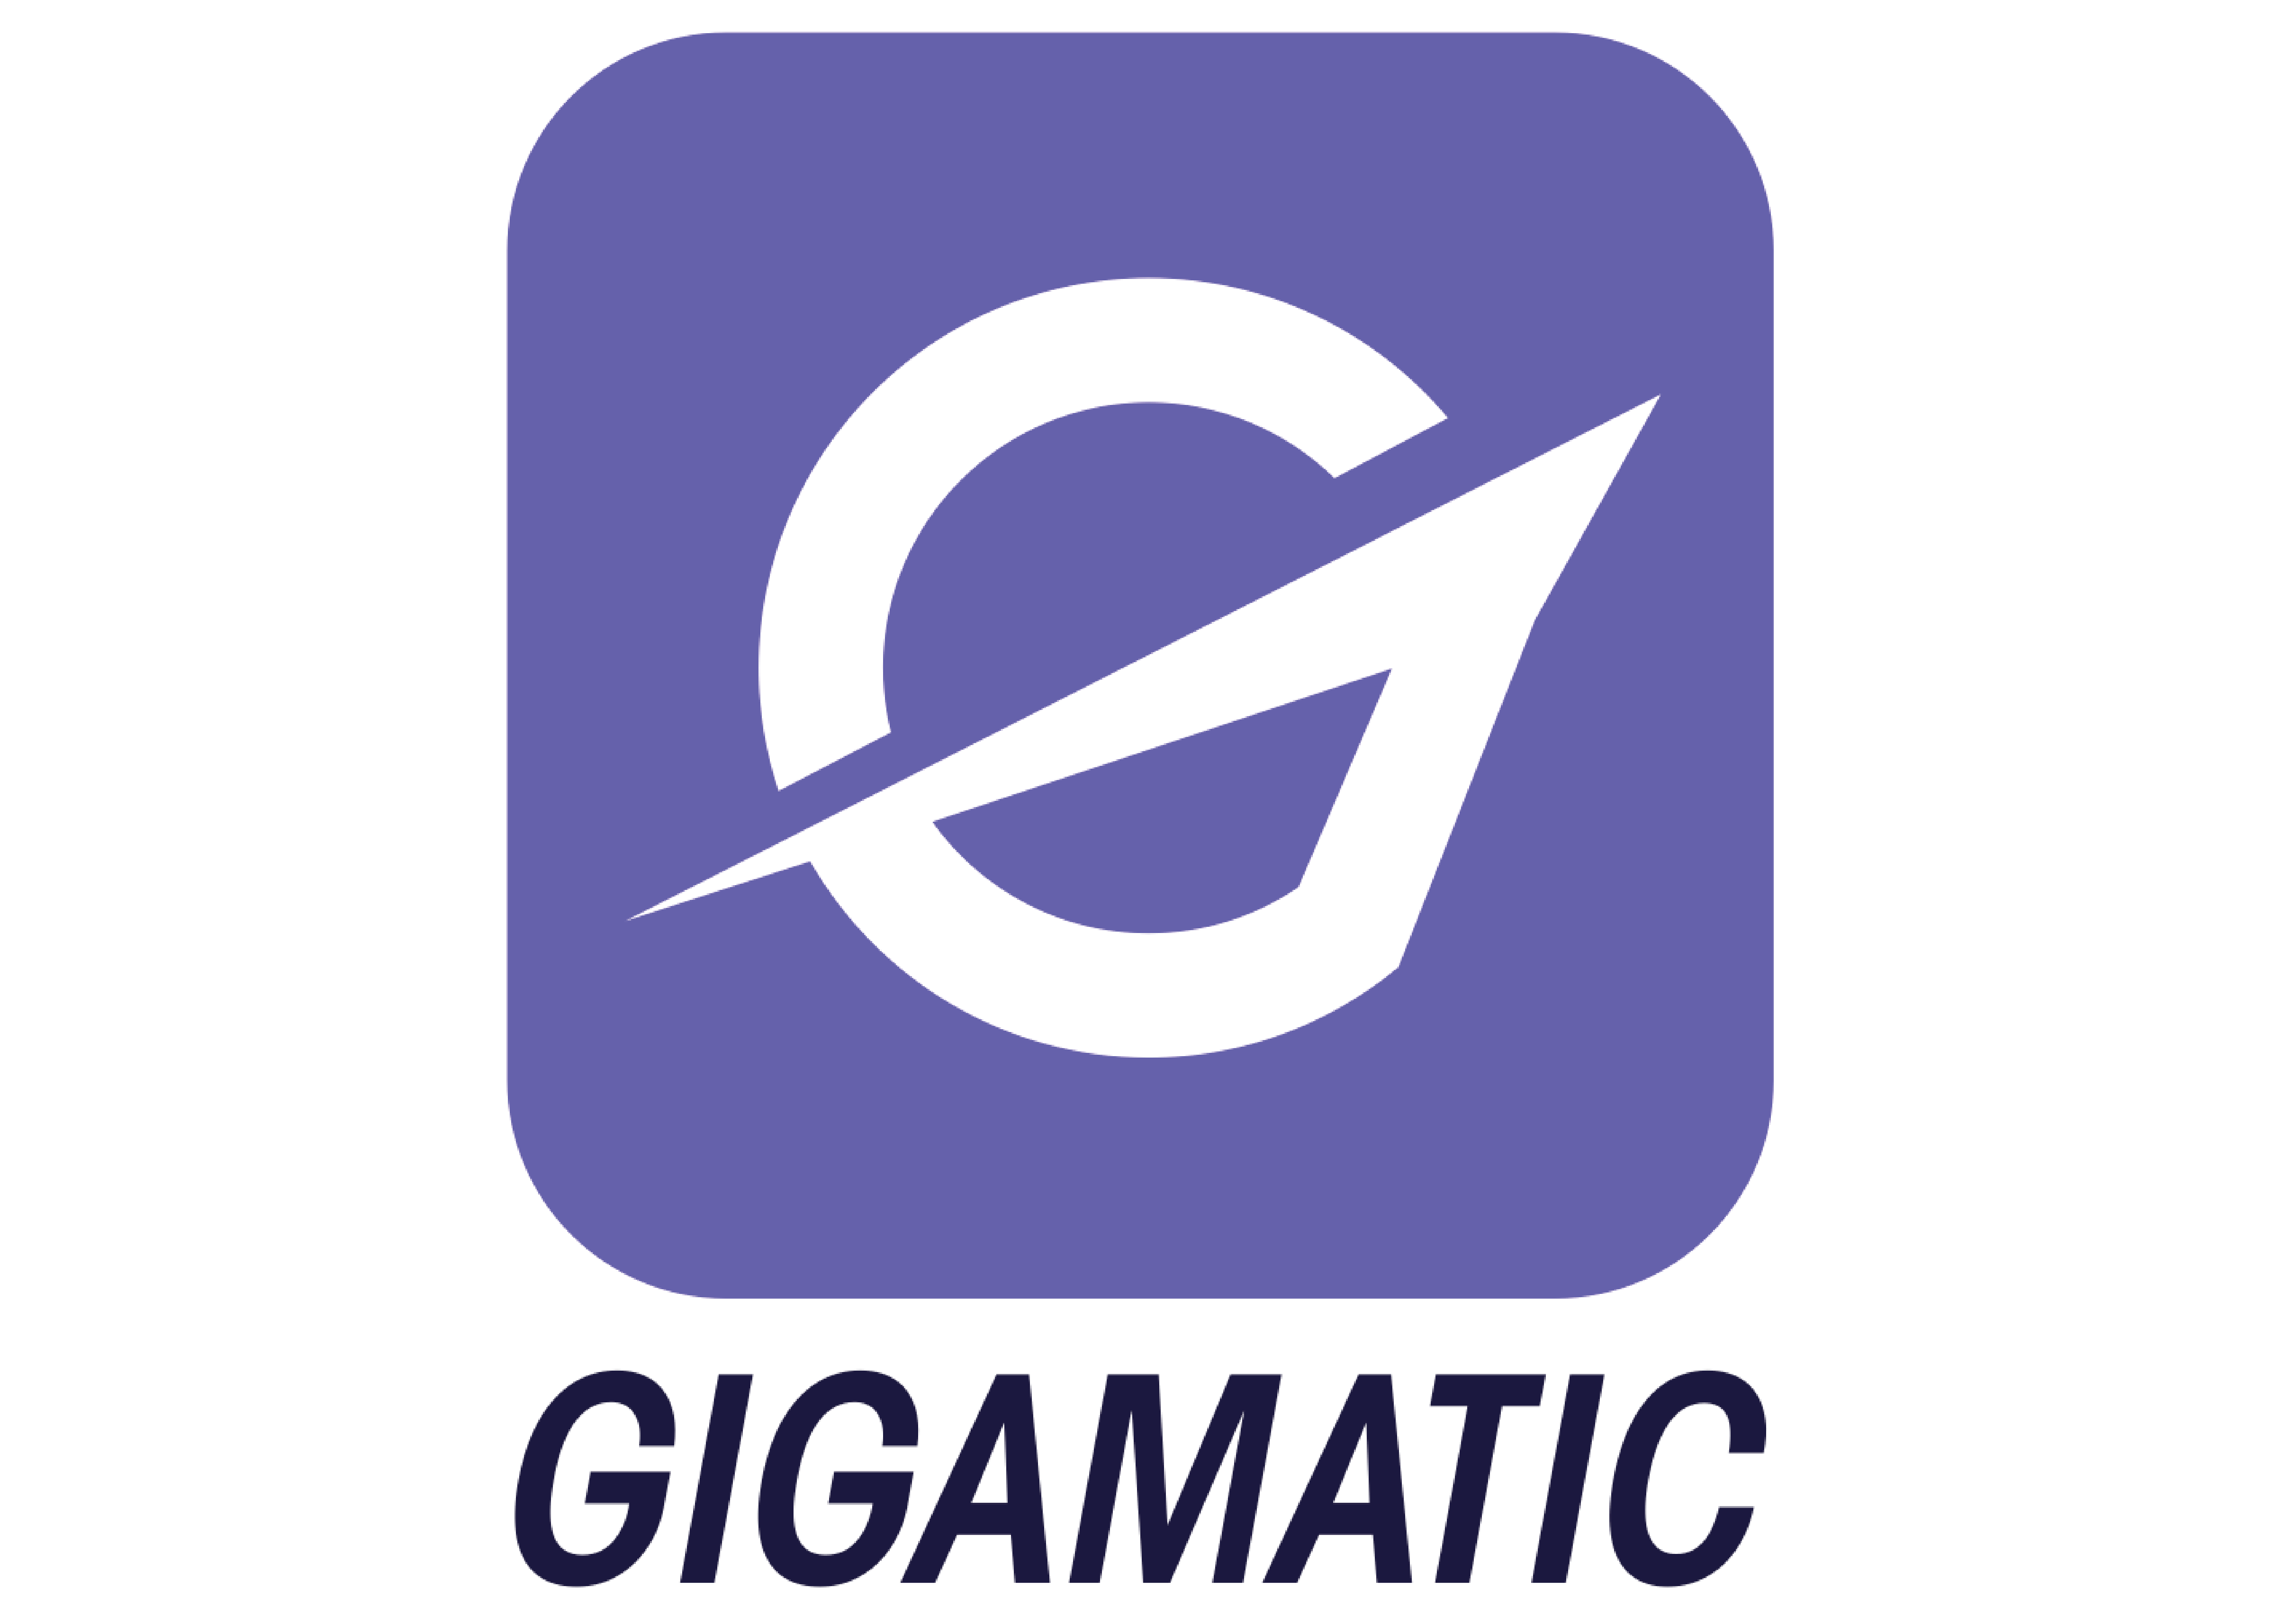 Gigmatic logo